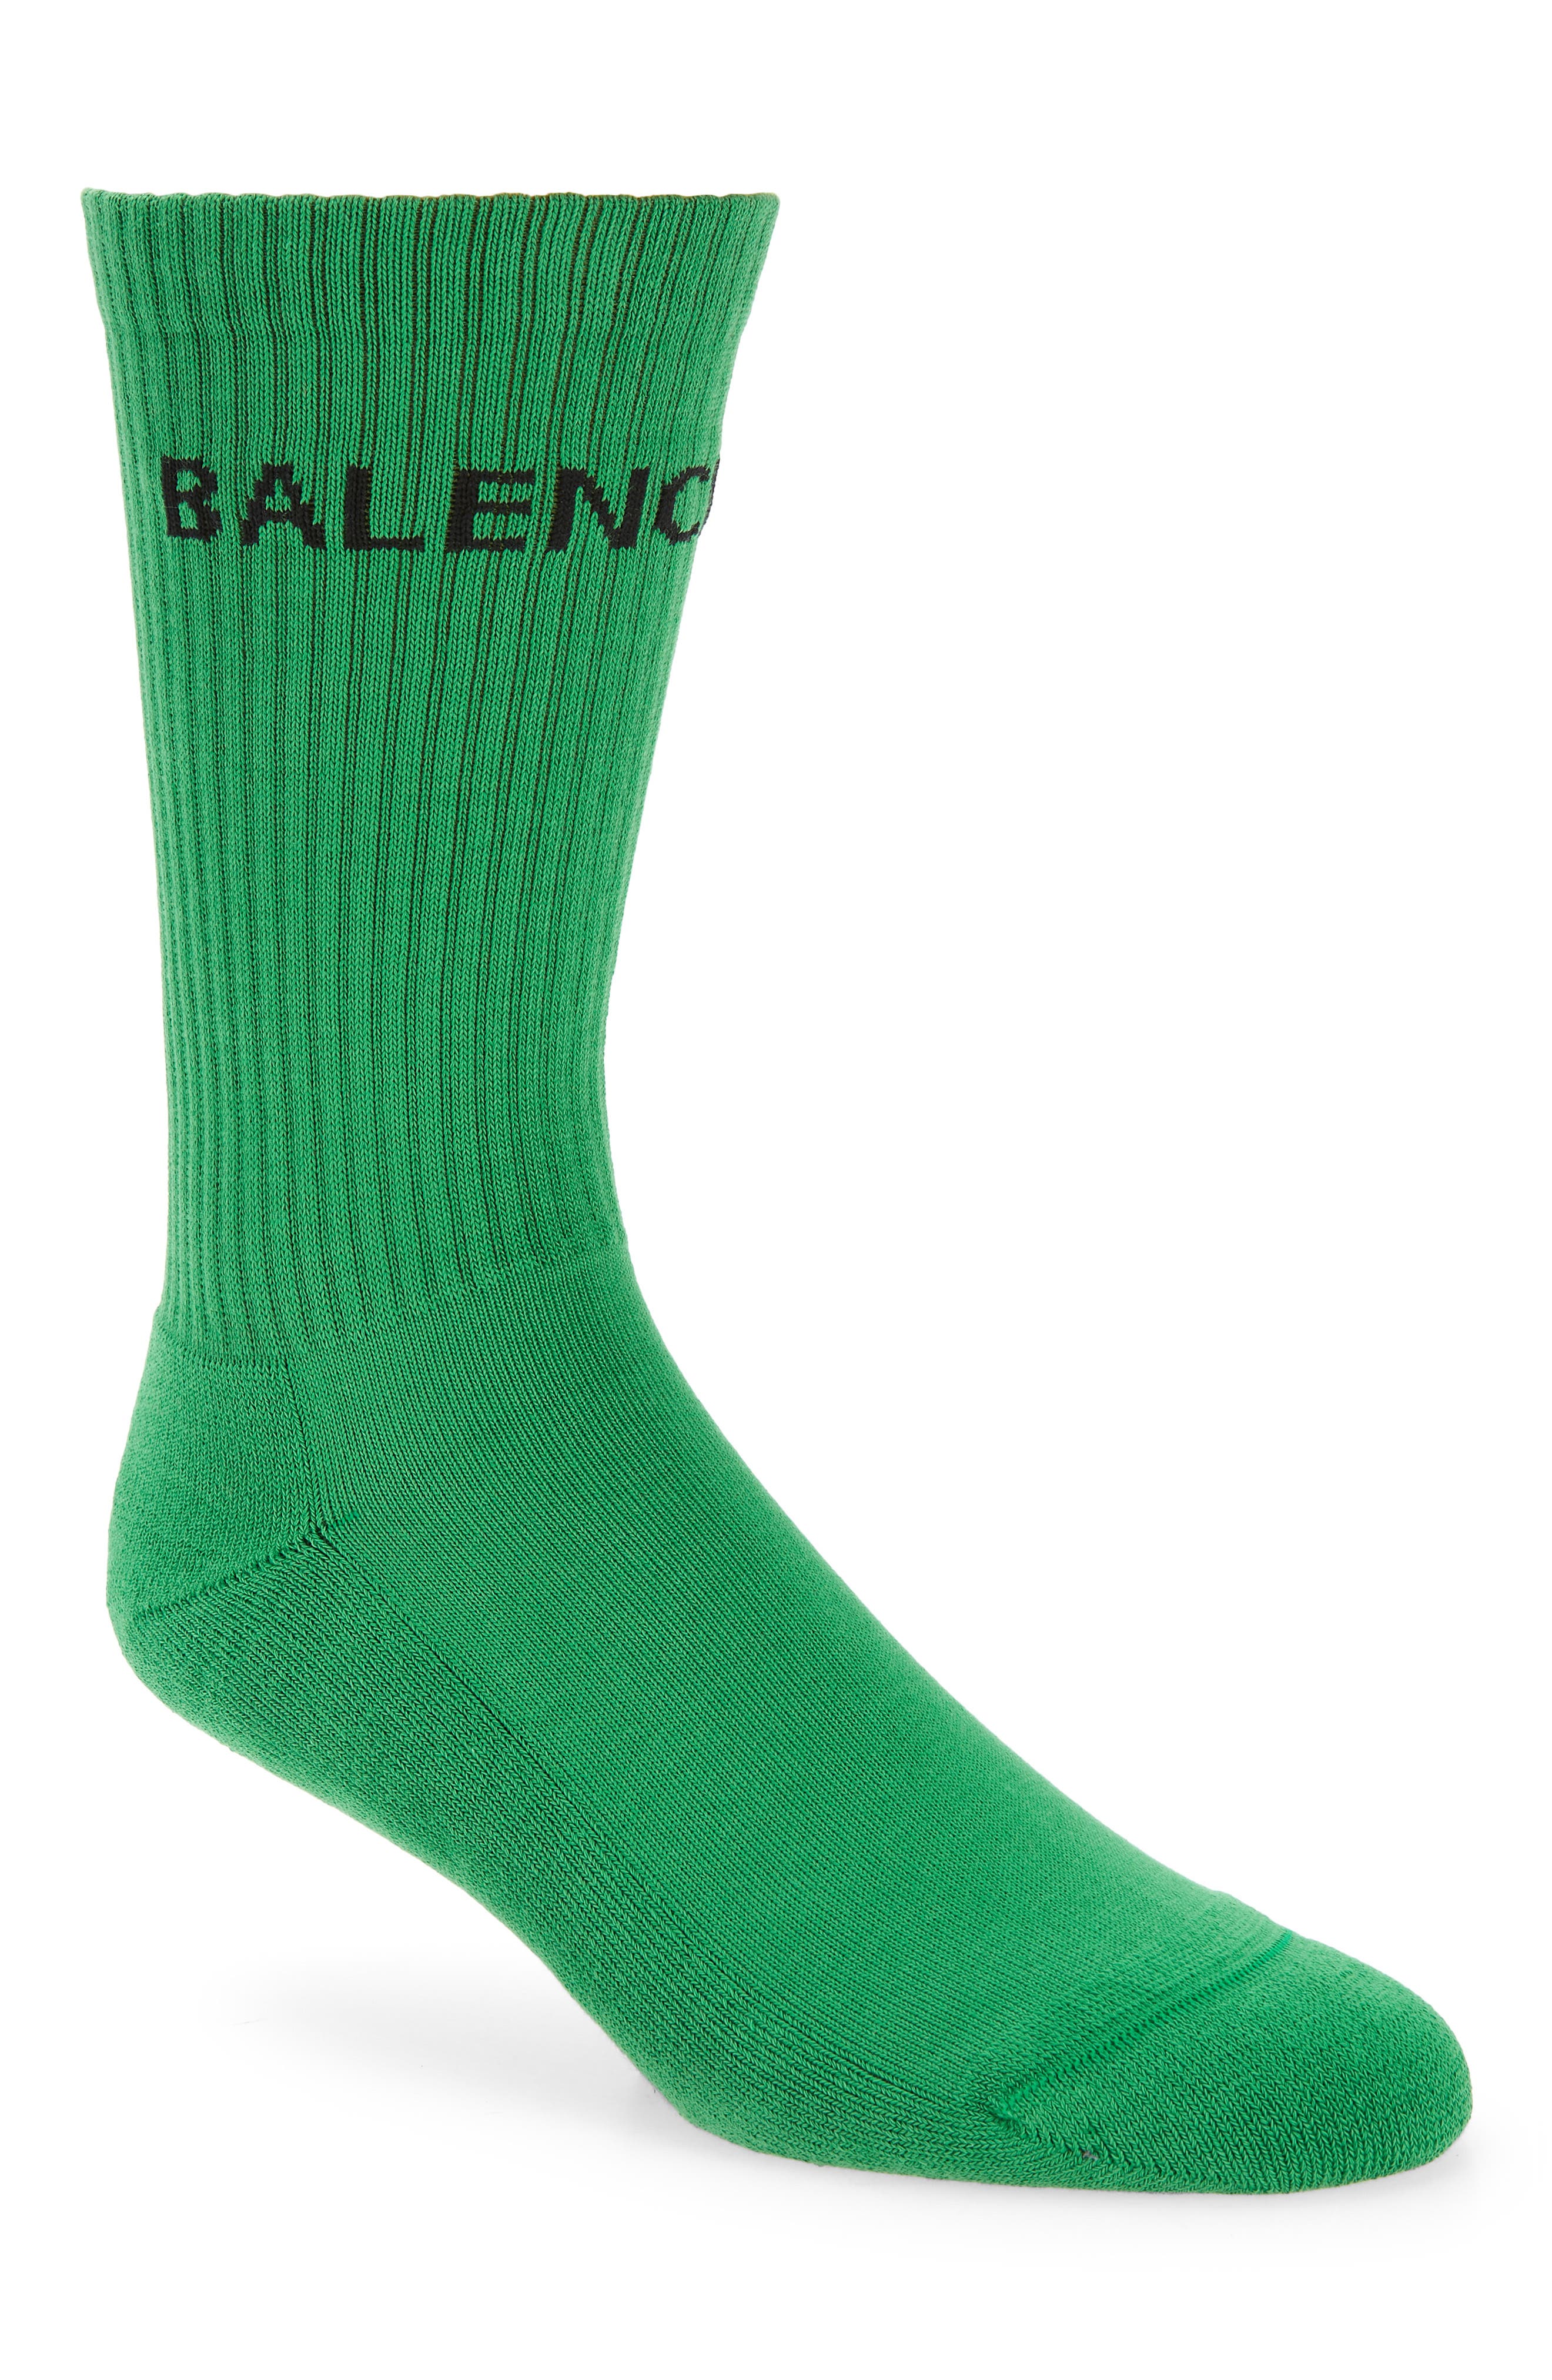 Balenciaga Logo Crew Socks in Green/Black